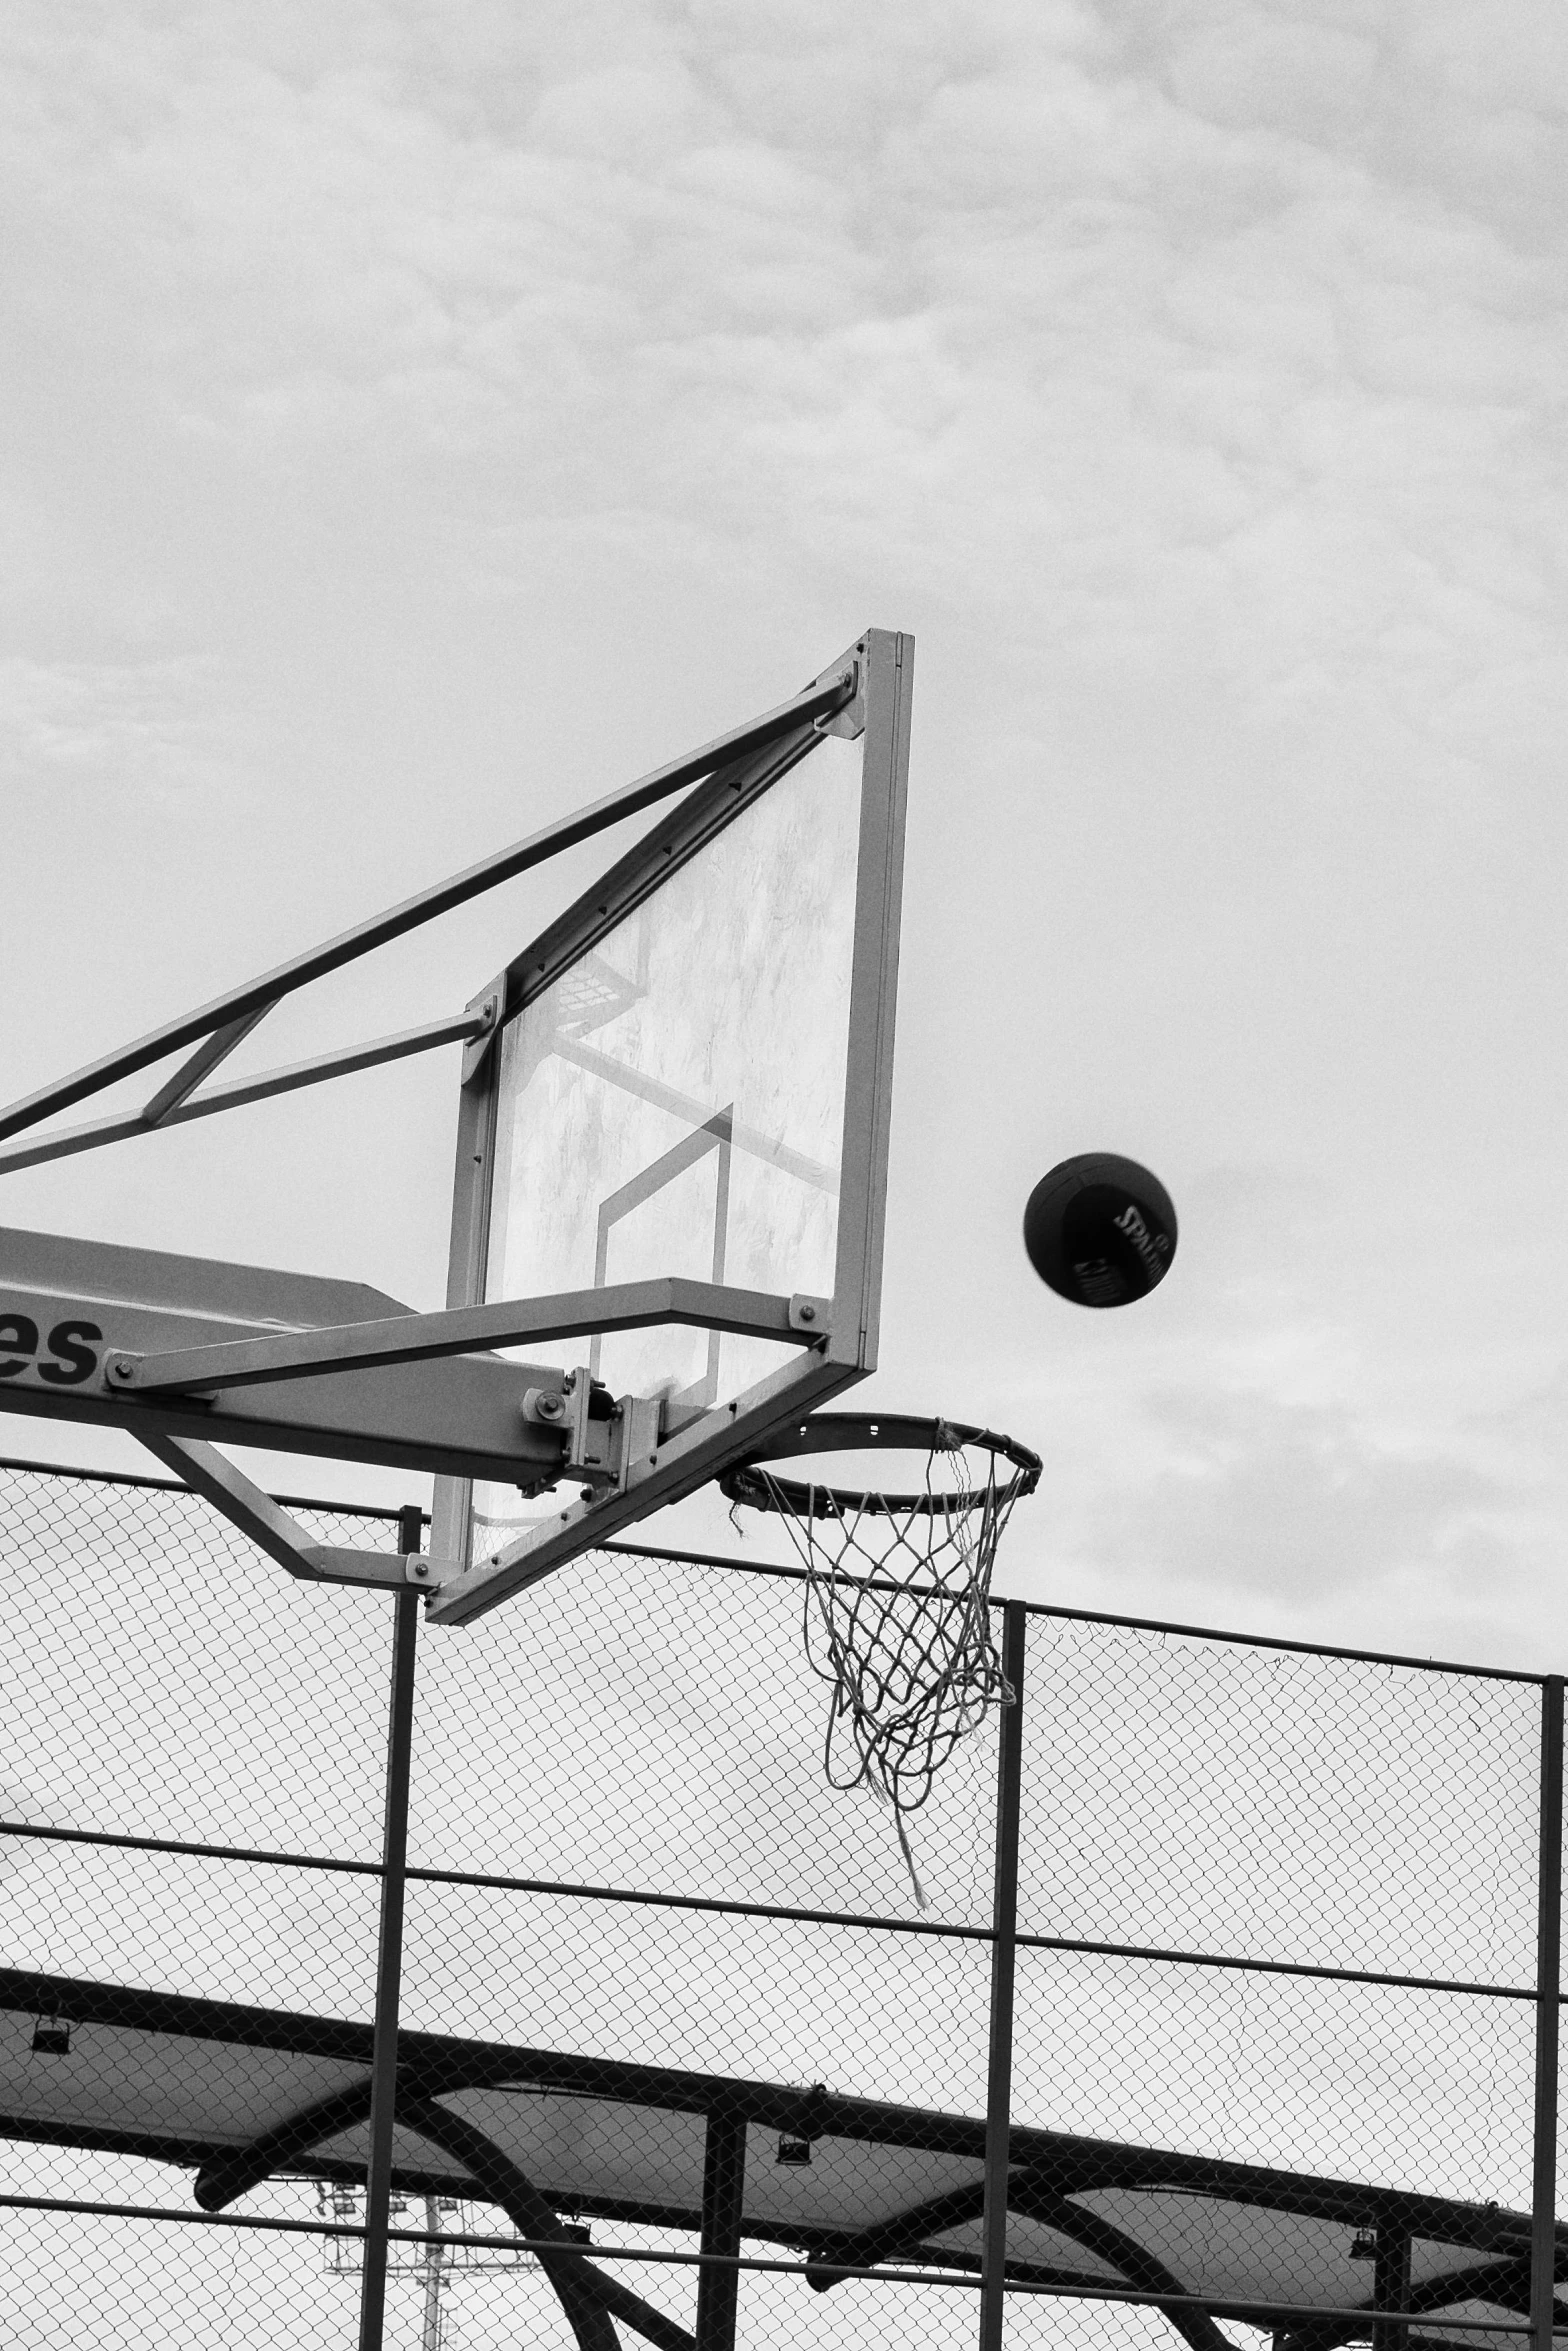 a basketball goal and hoop above a net